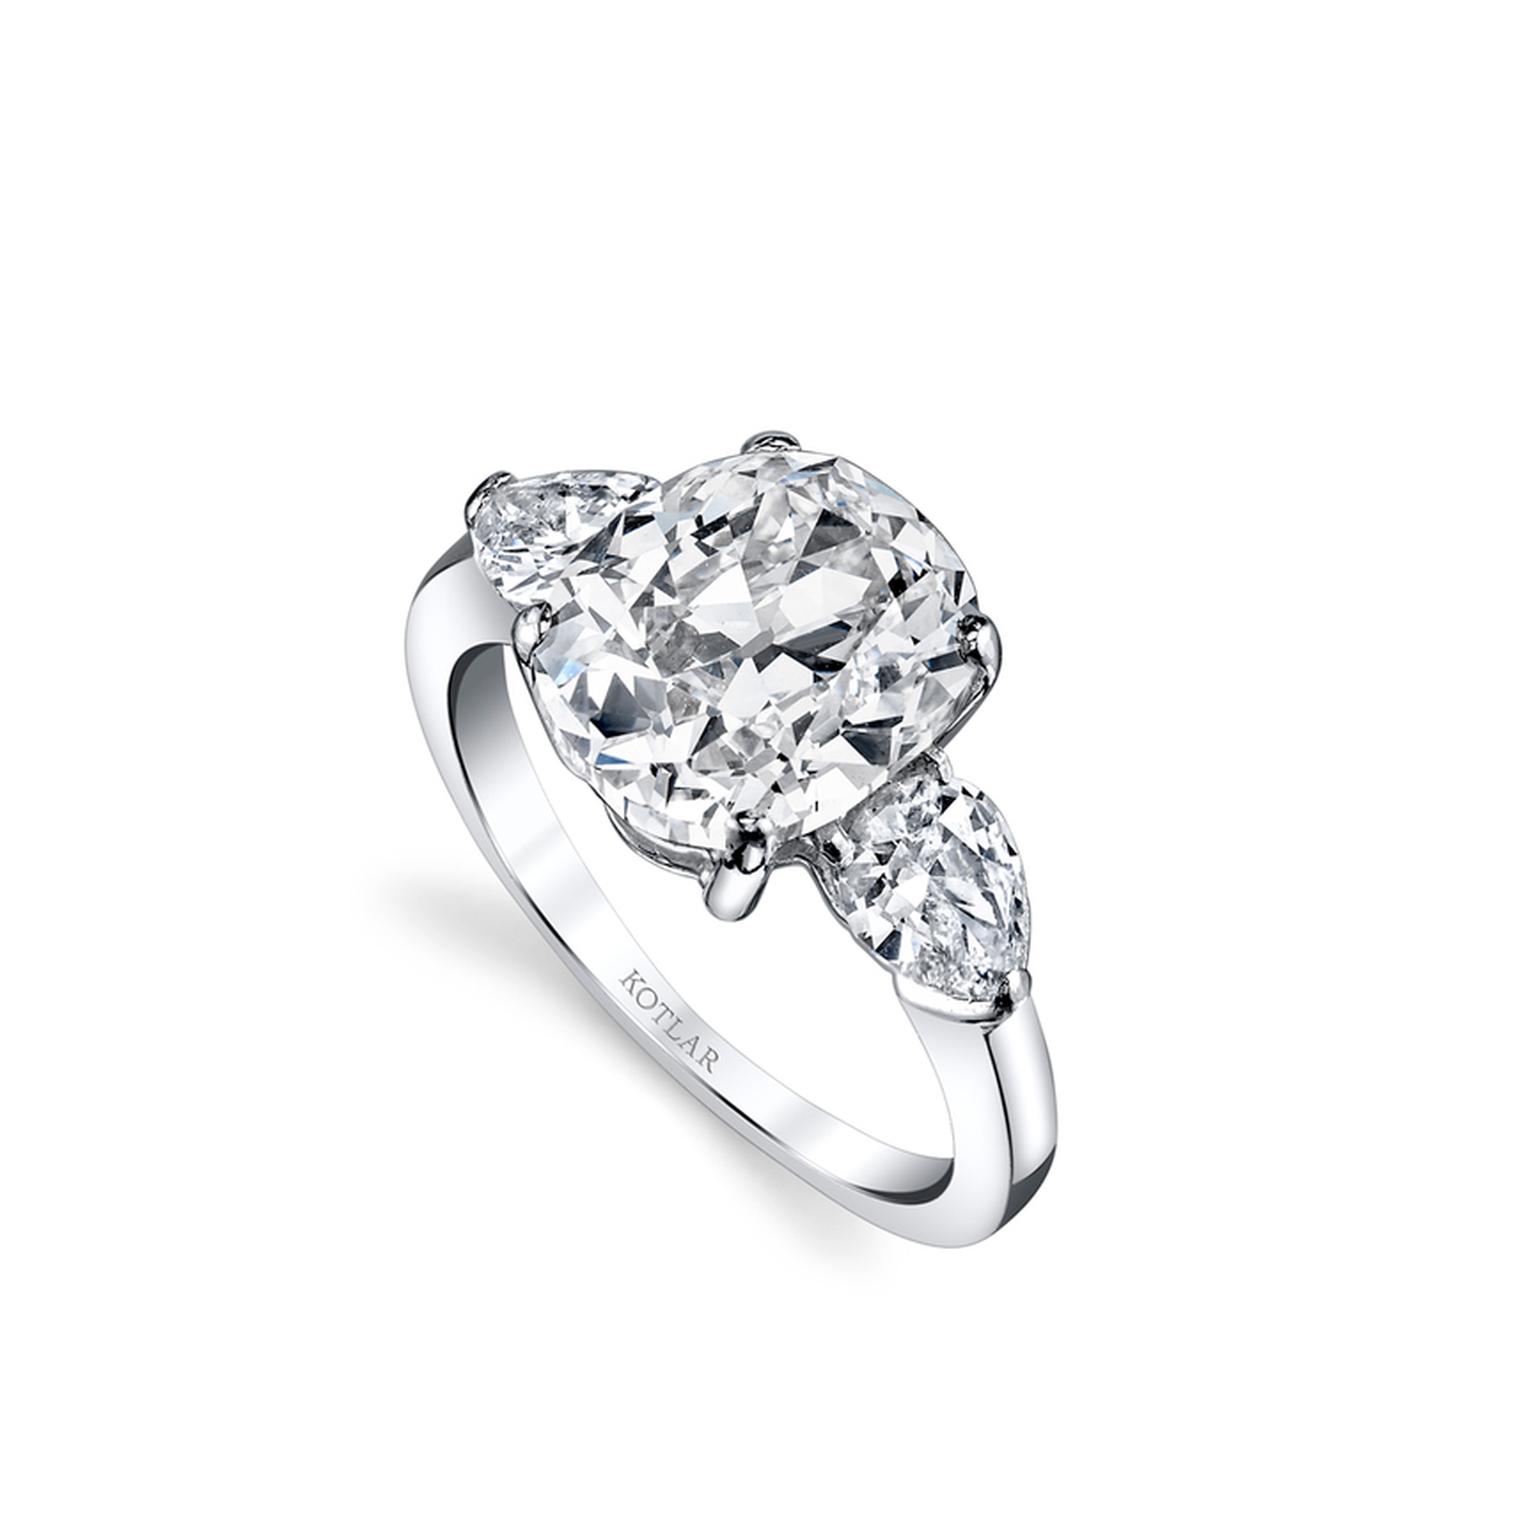 Harry Kotlar 4.40-carat cushion-cut diamond Classico engagement ring